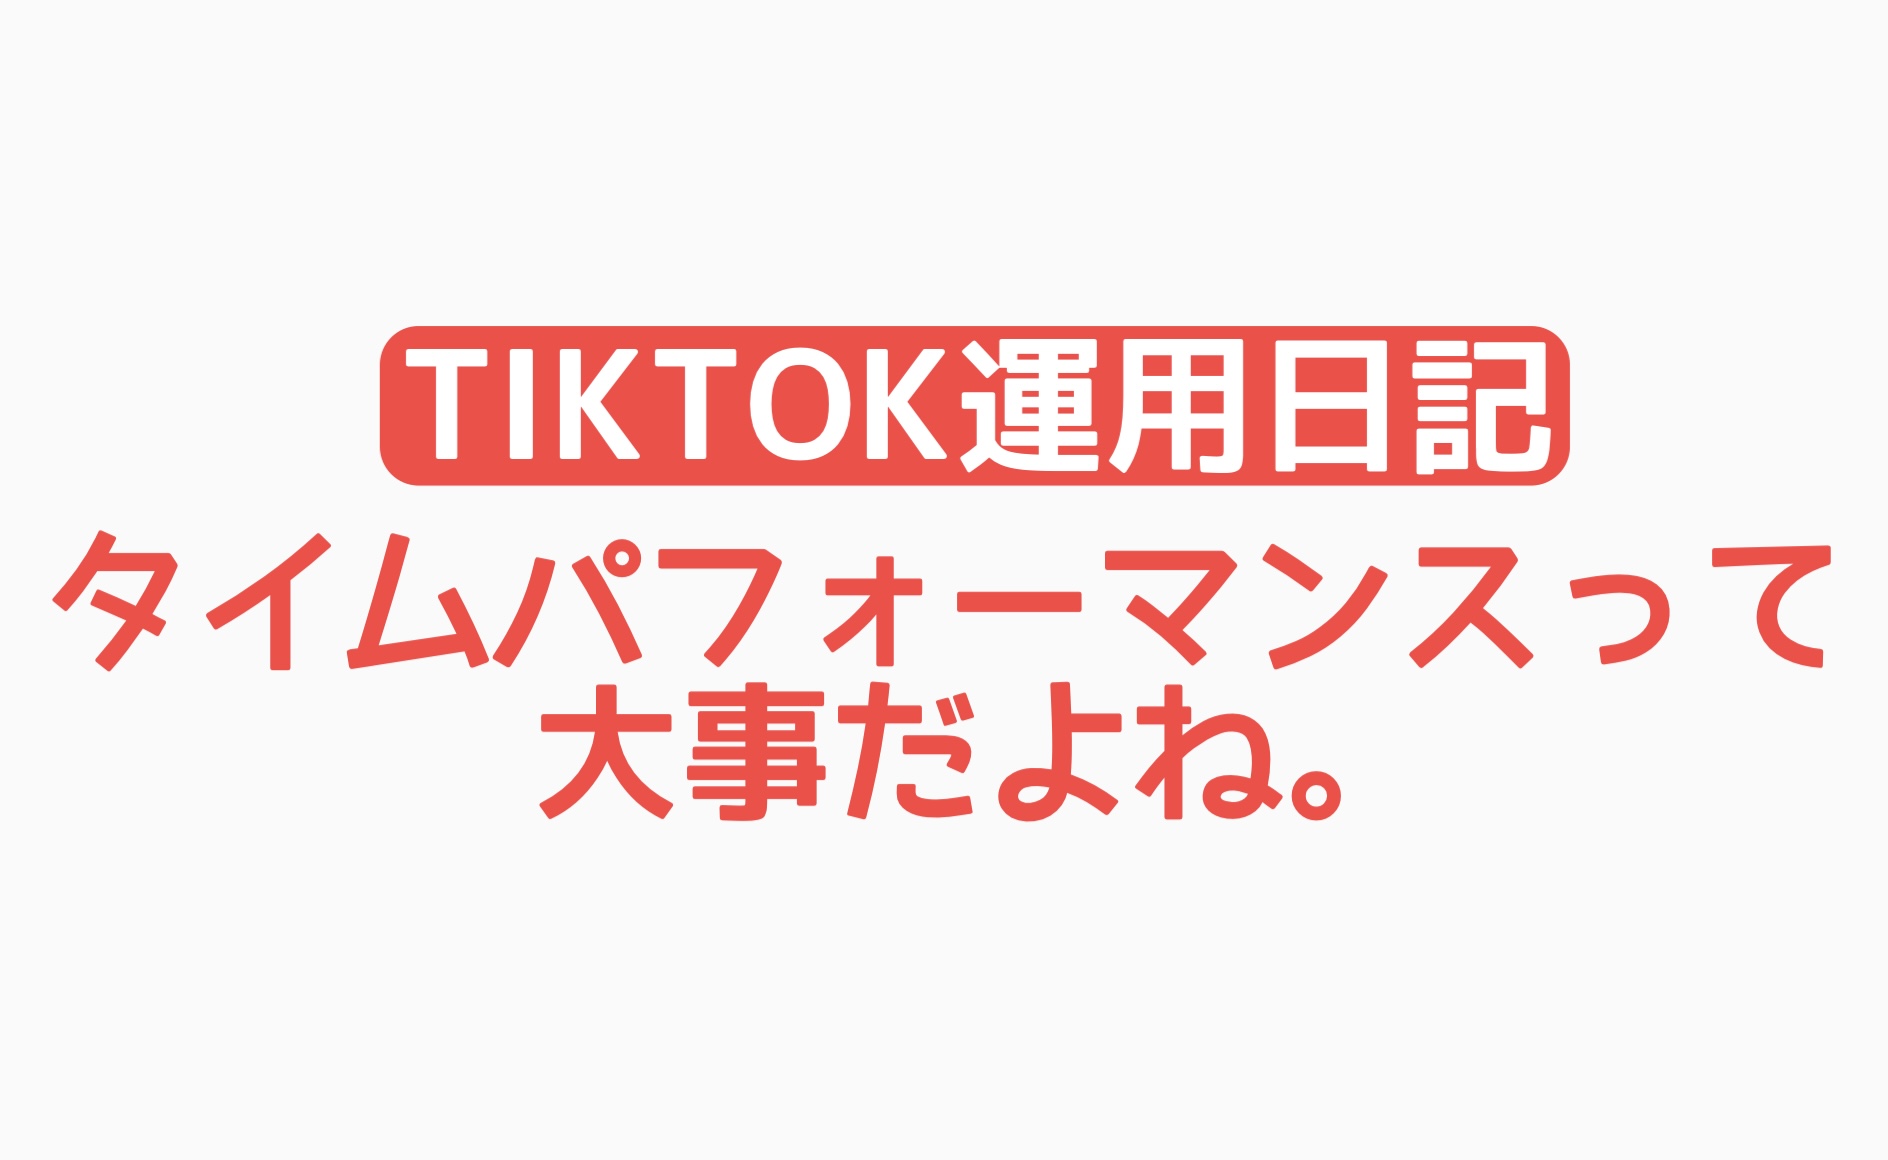 【TikTok運用日記】タイムパフォーマンスって大事だよね。